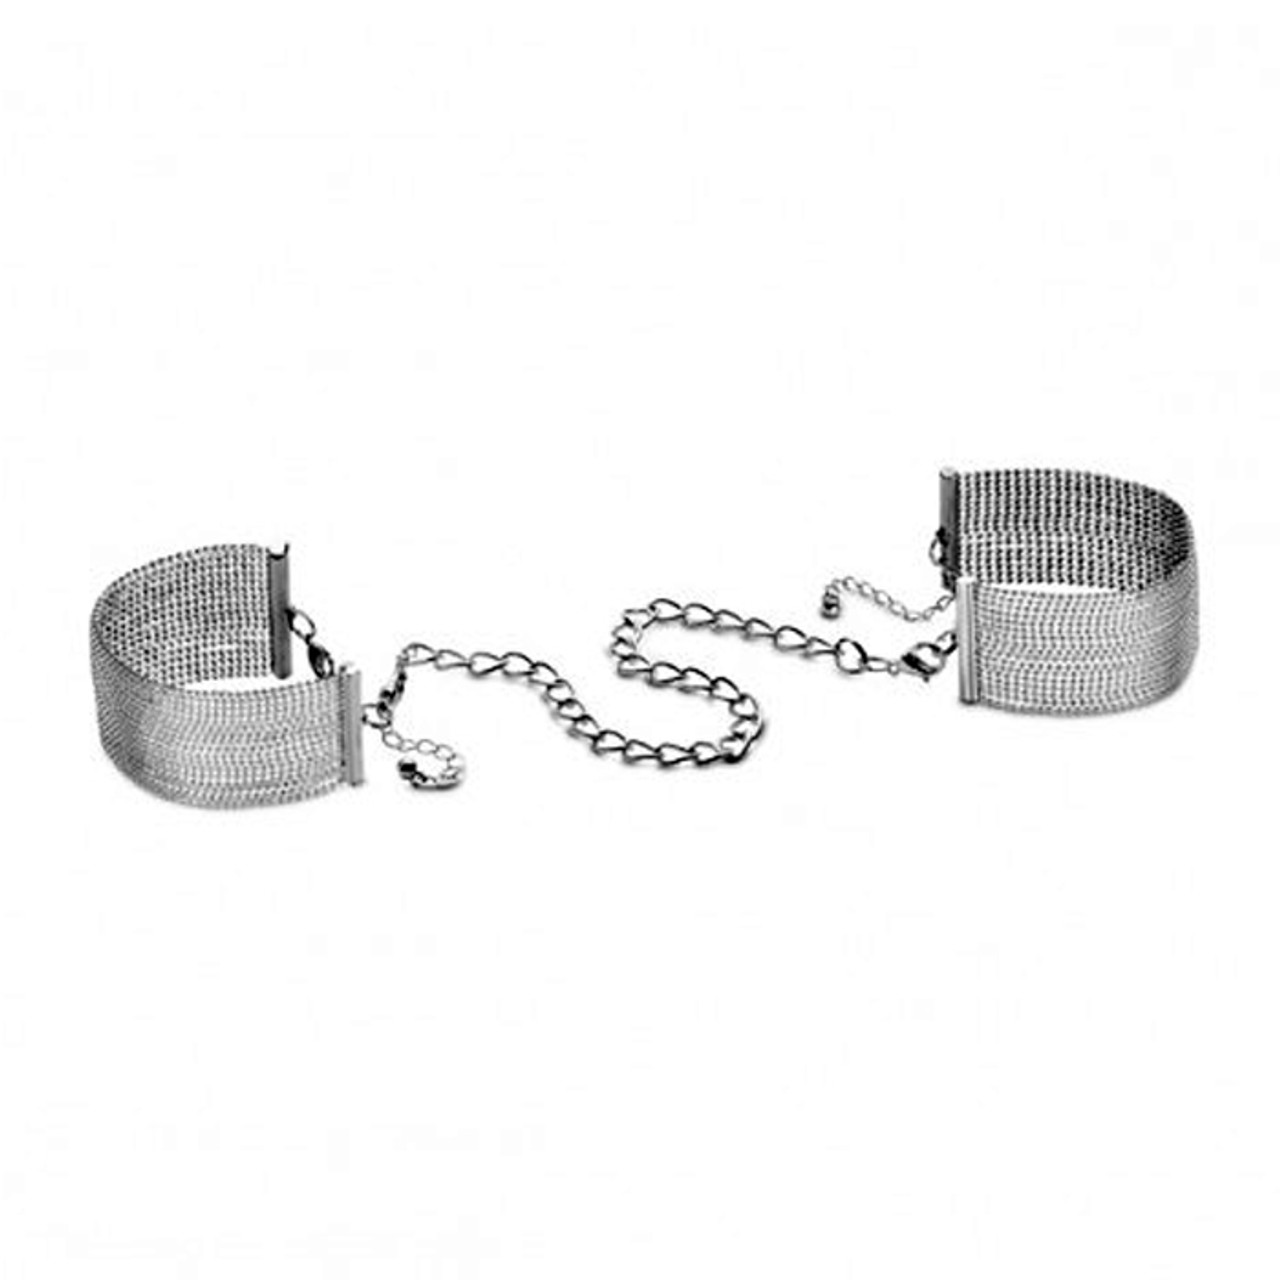 Bijoux Indiscrets The Magnifique Collection Metallic Silver Chain Bracelets  Handcuffs - Dallas Novelty - Online Sex Toys Retailer